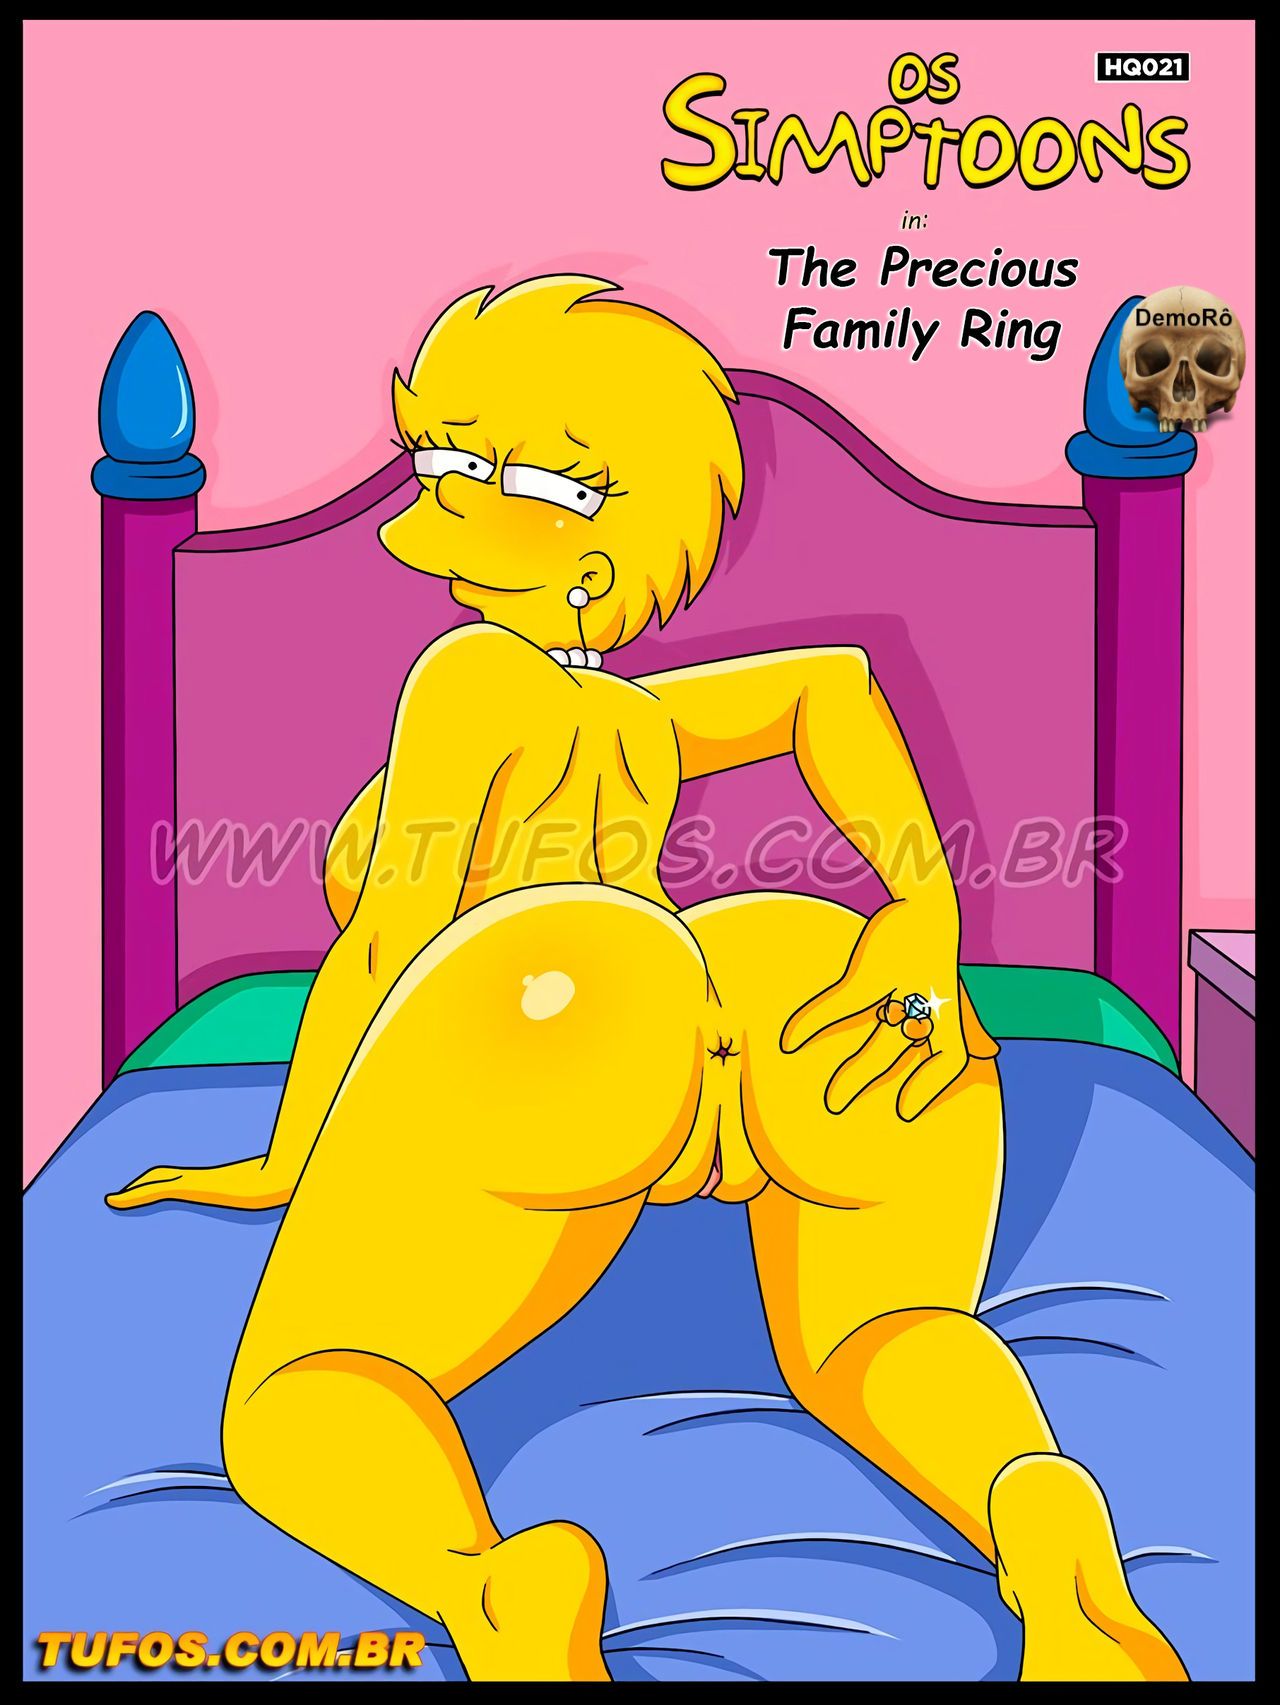 [Tufos] The Simpsons - The Precious Family Ring 1